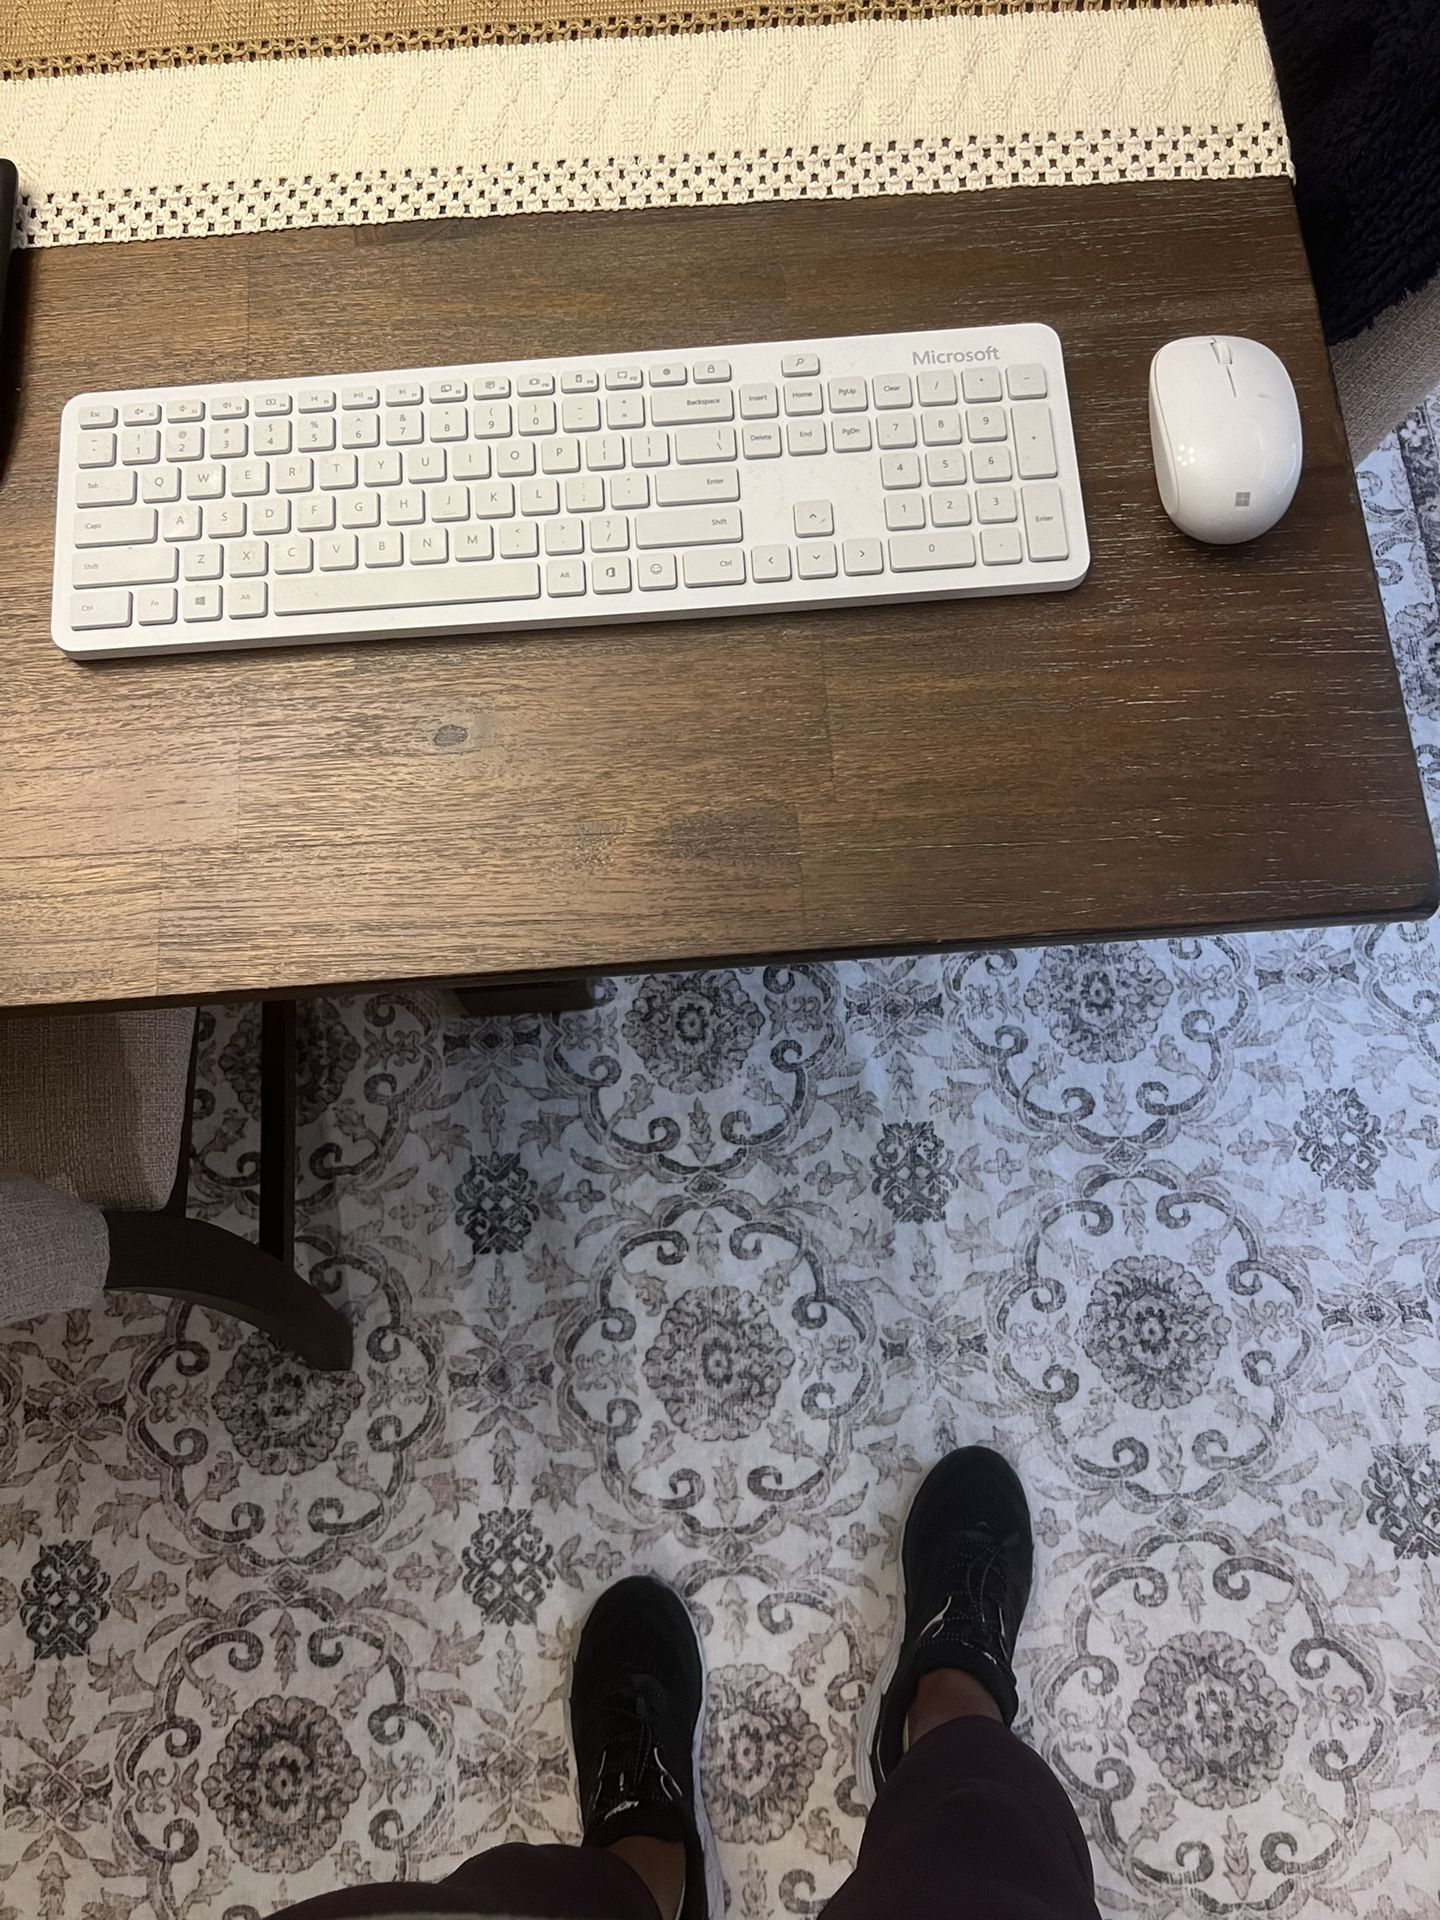 Microsoft Keyboard And Mouse